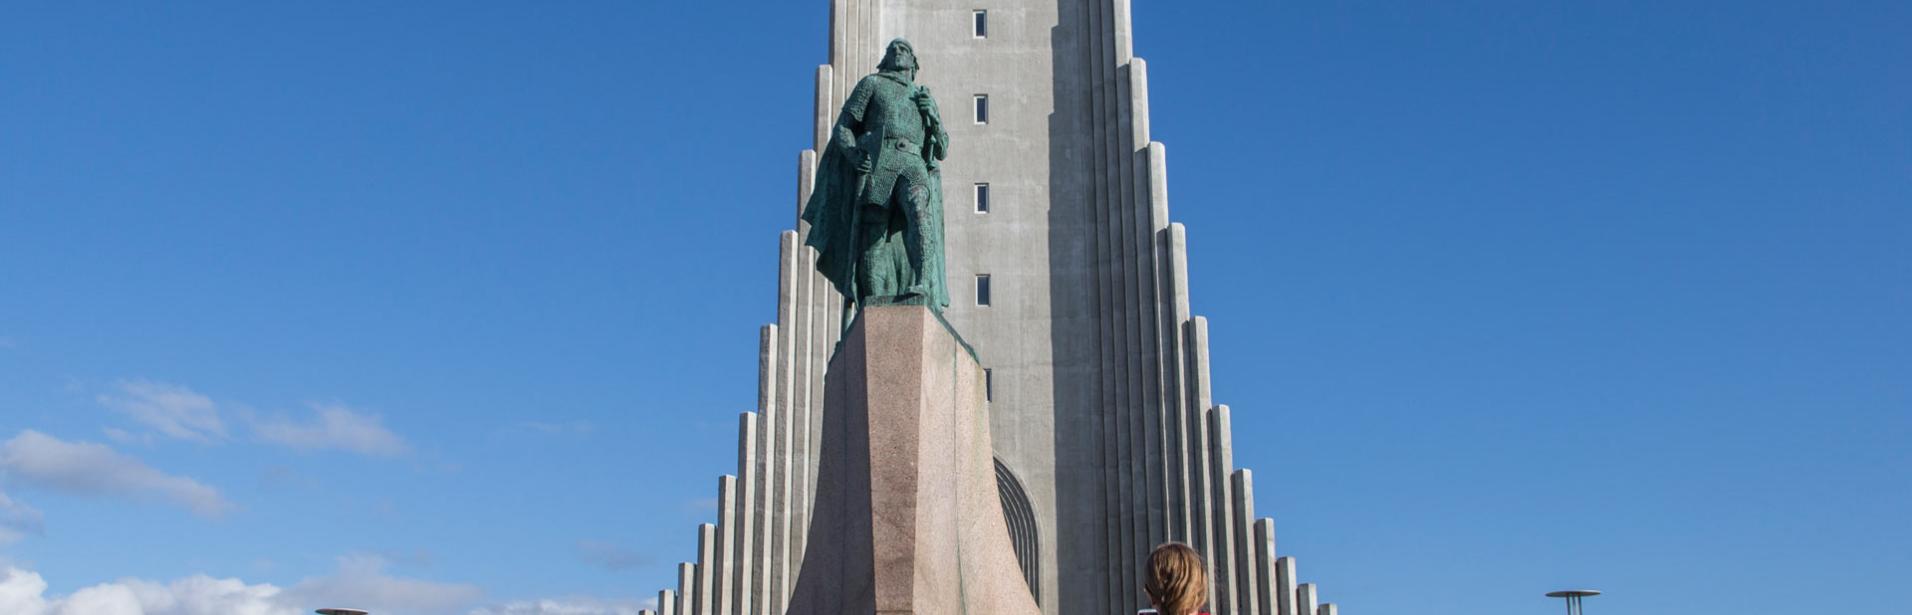 Hallgrimskirkja på Island